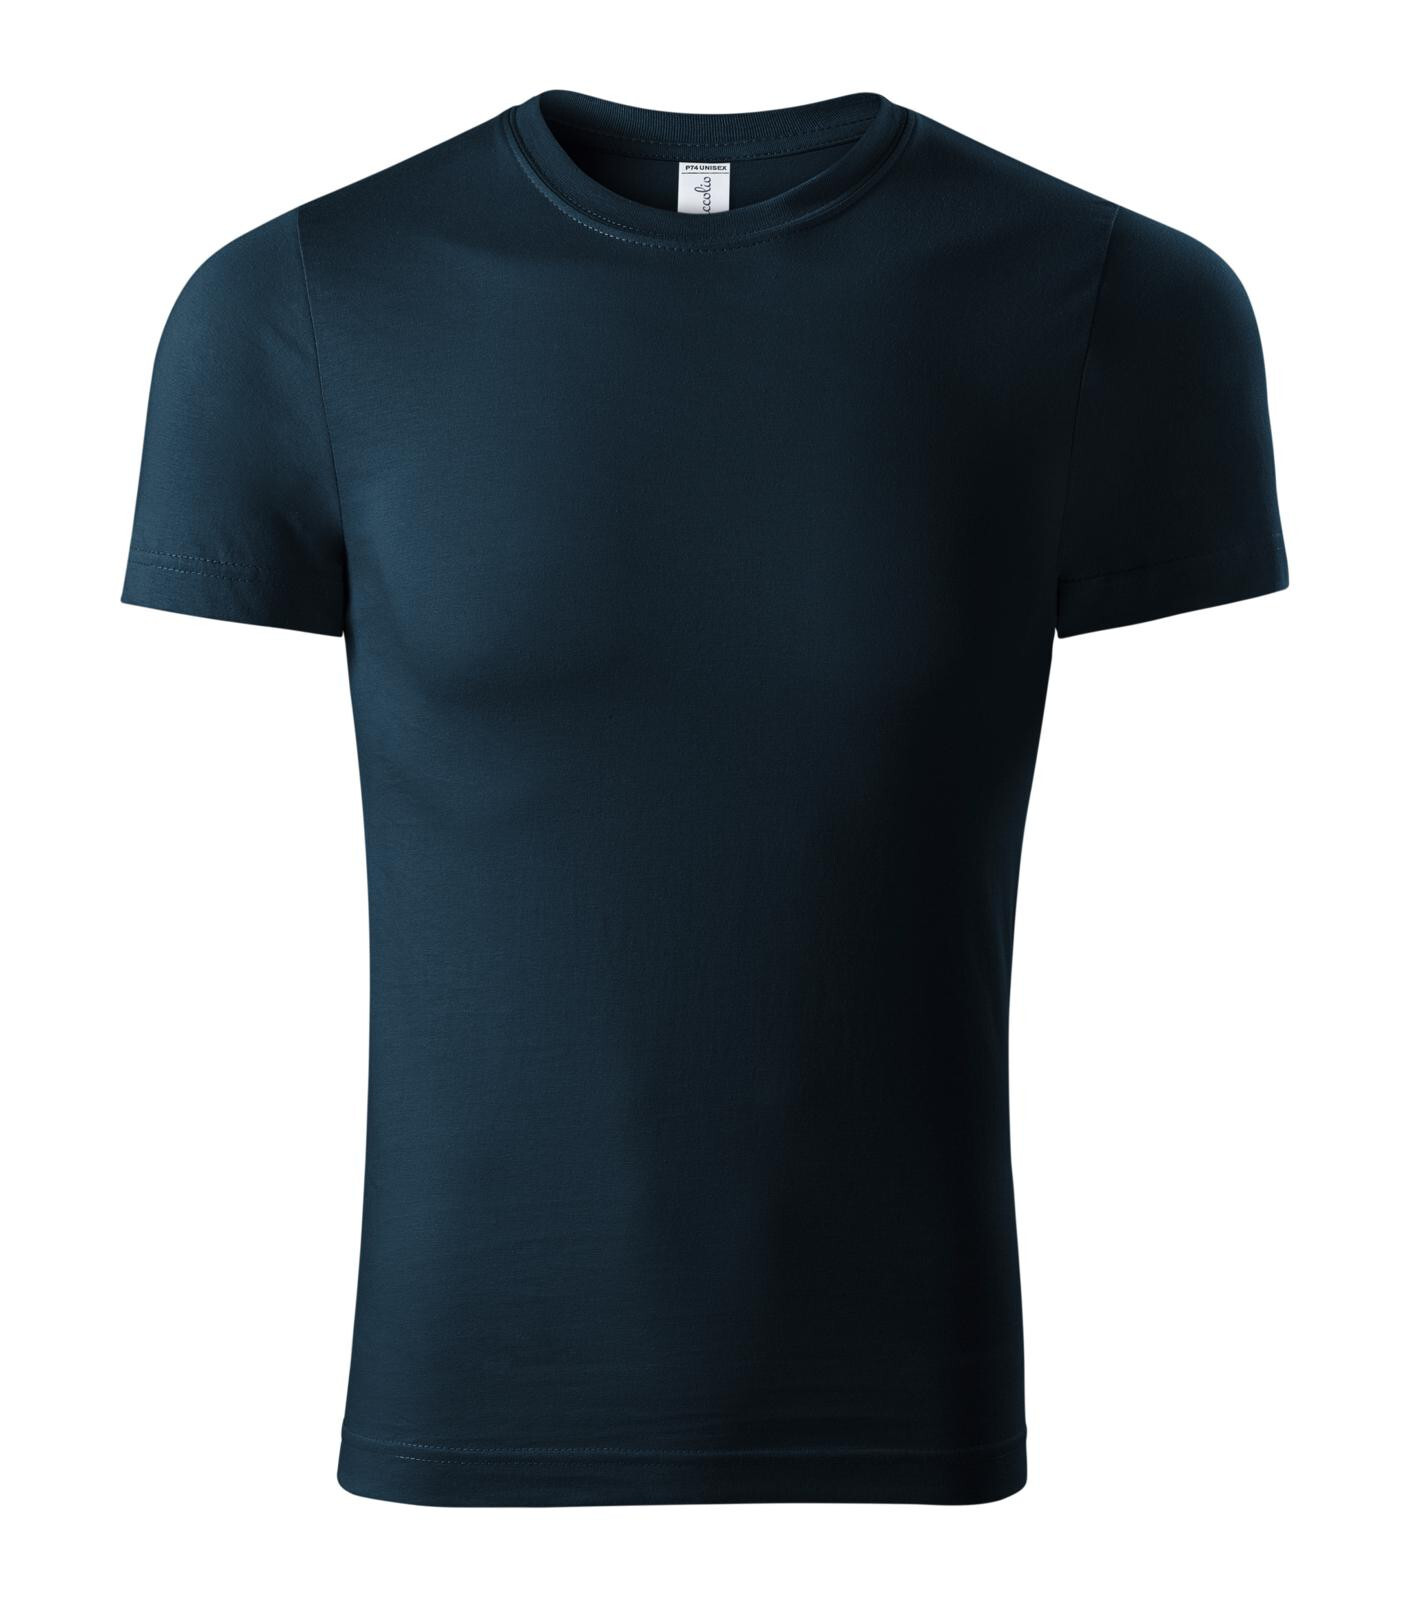 Unisex bavlnené tričko Piccolio Peak P74 - veľkosť: L, farba: tmavo modrá